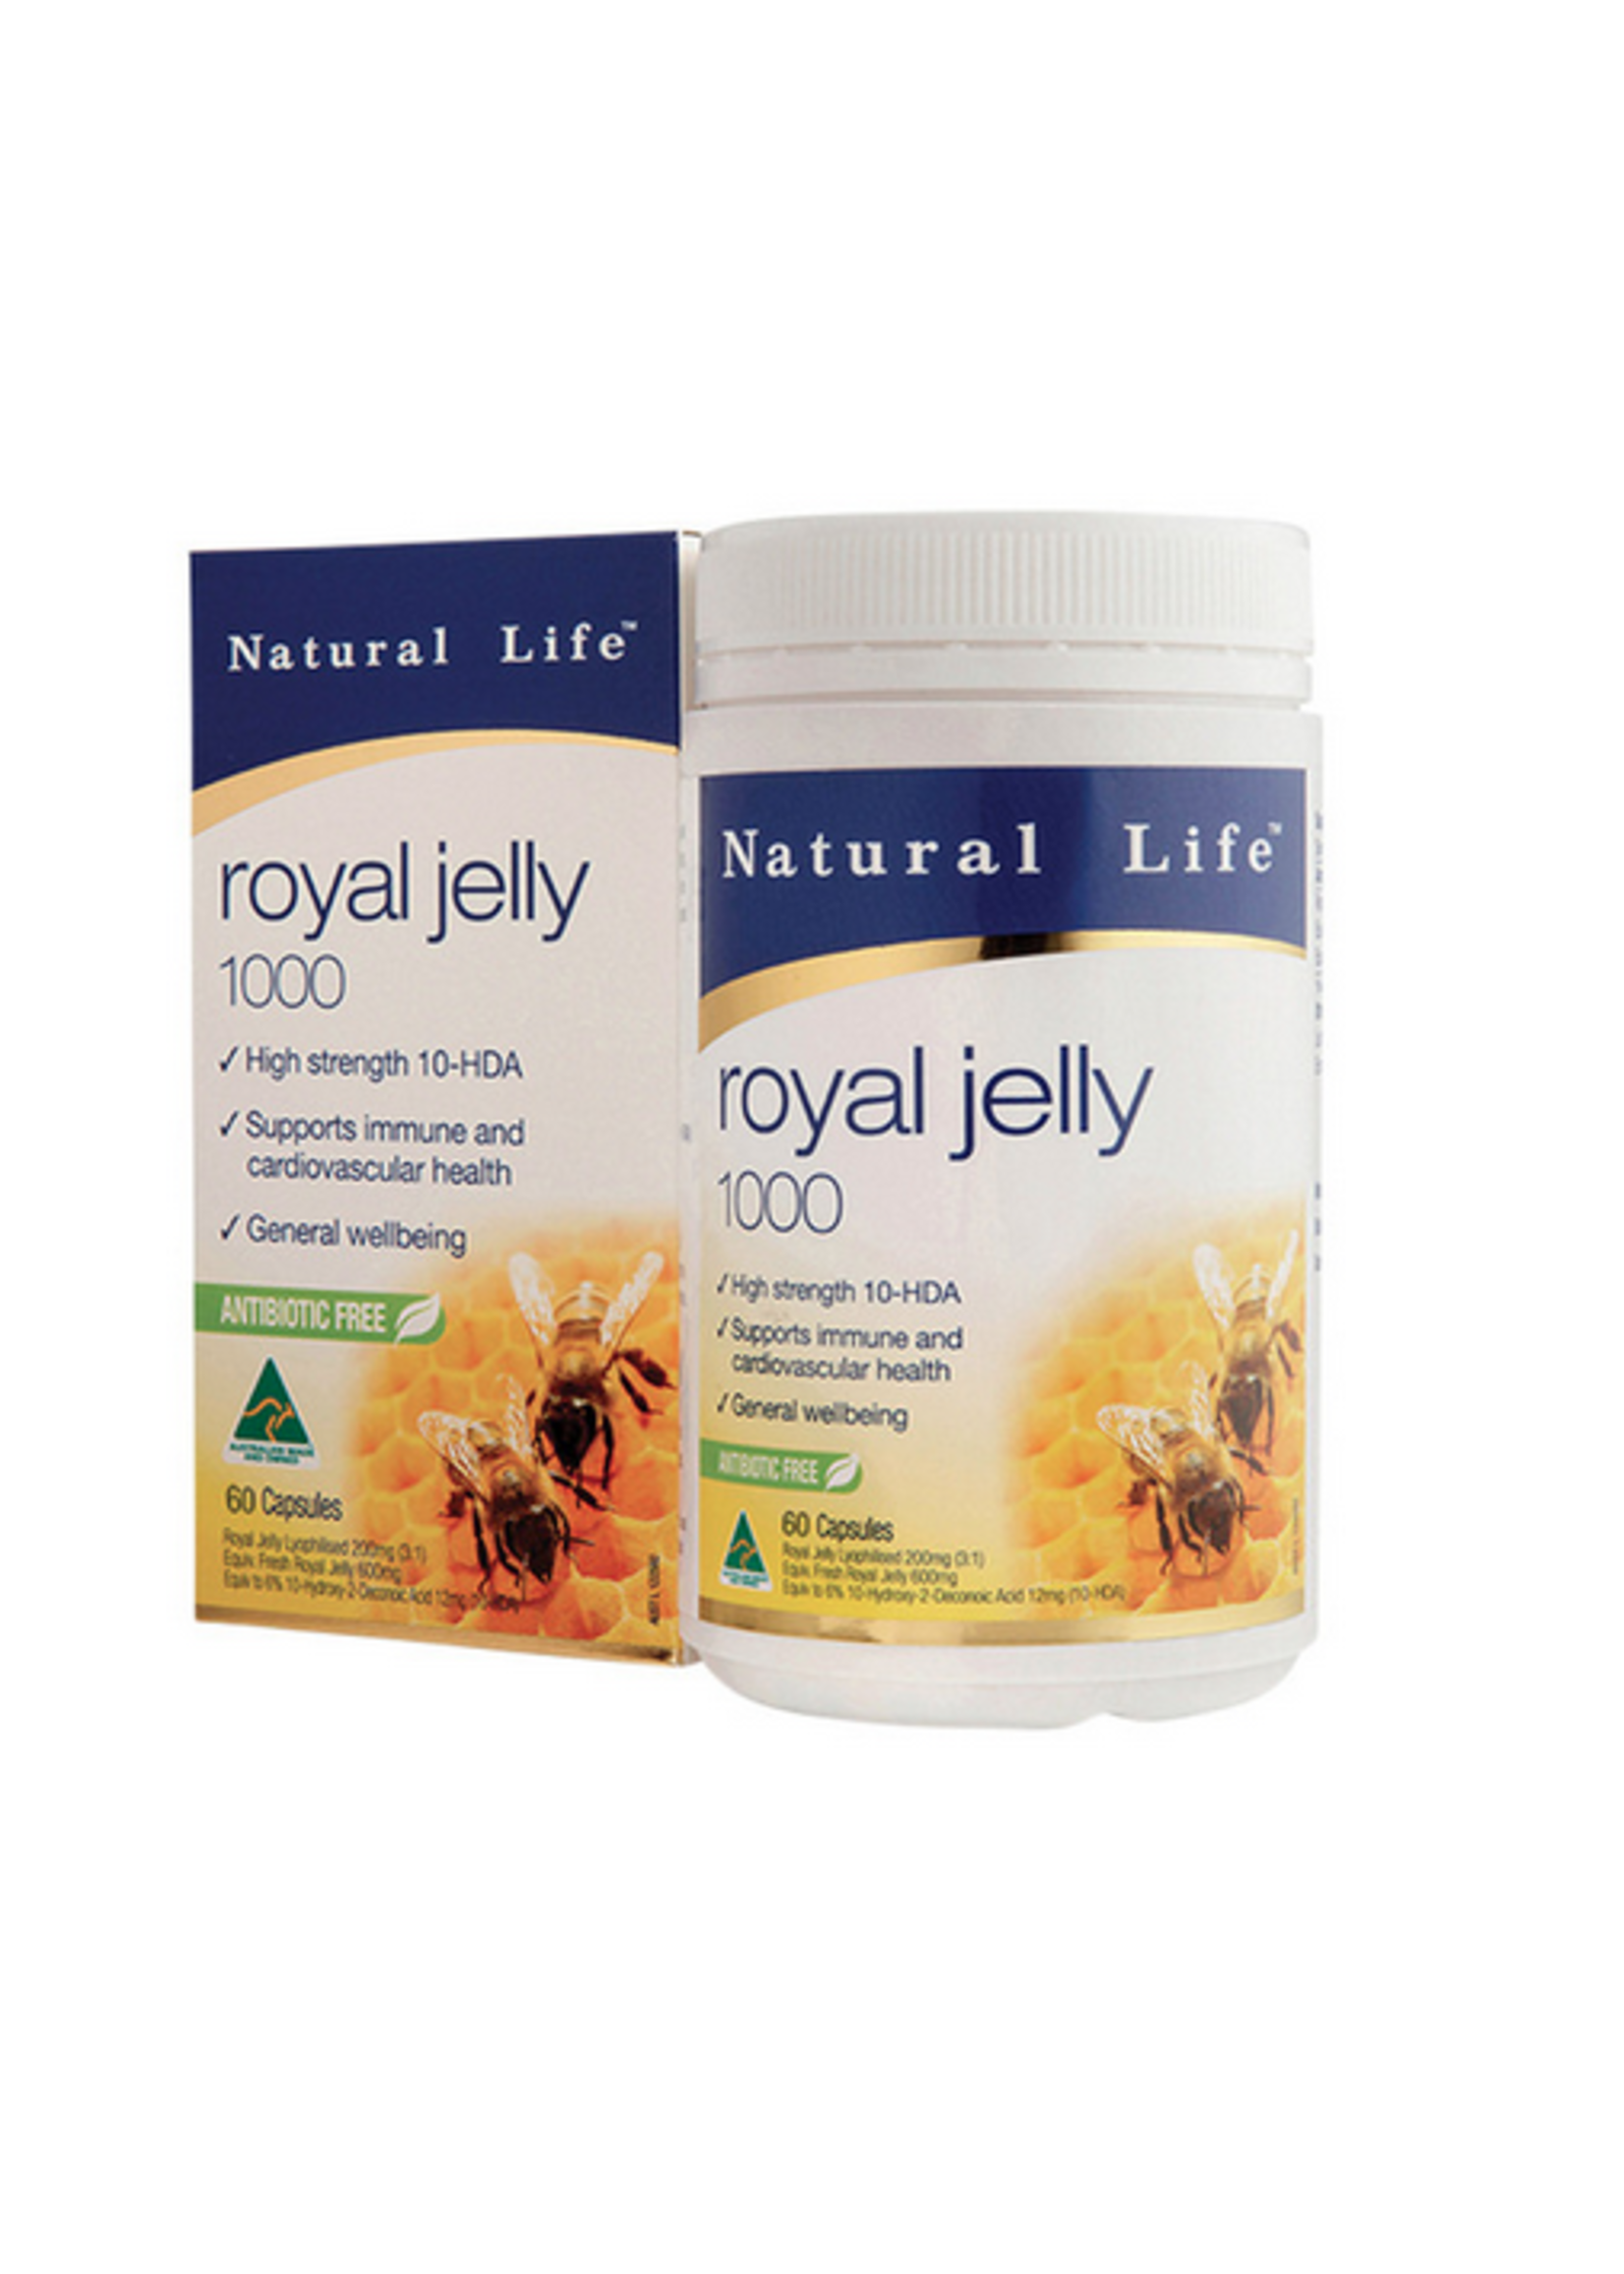 Natural Life Royal Jelly 1000 60 Capsules